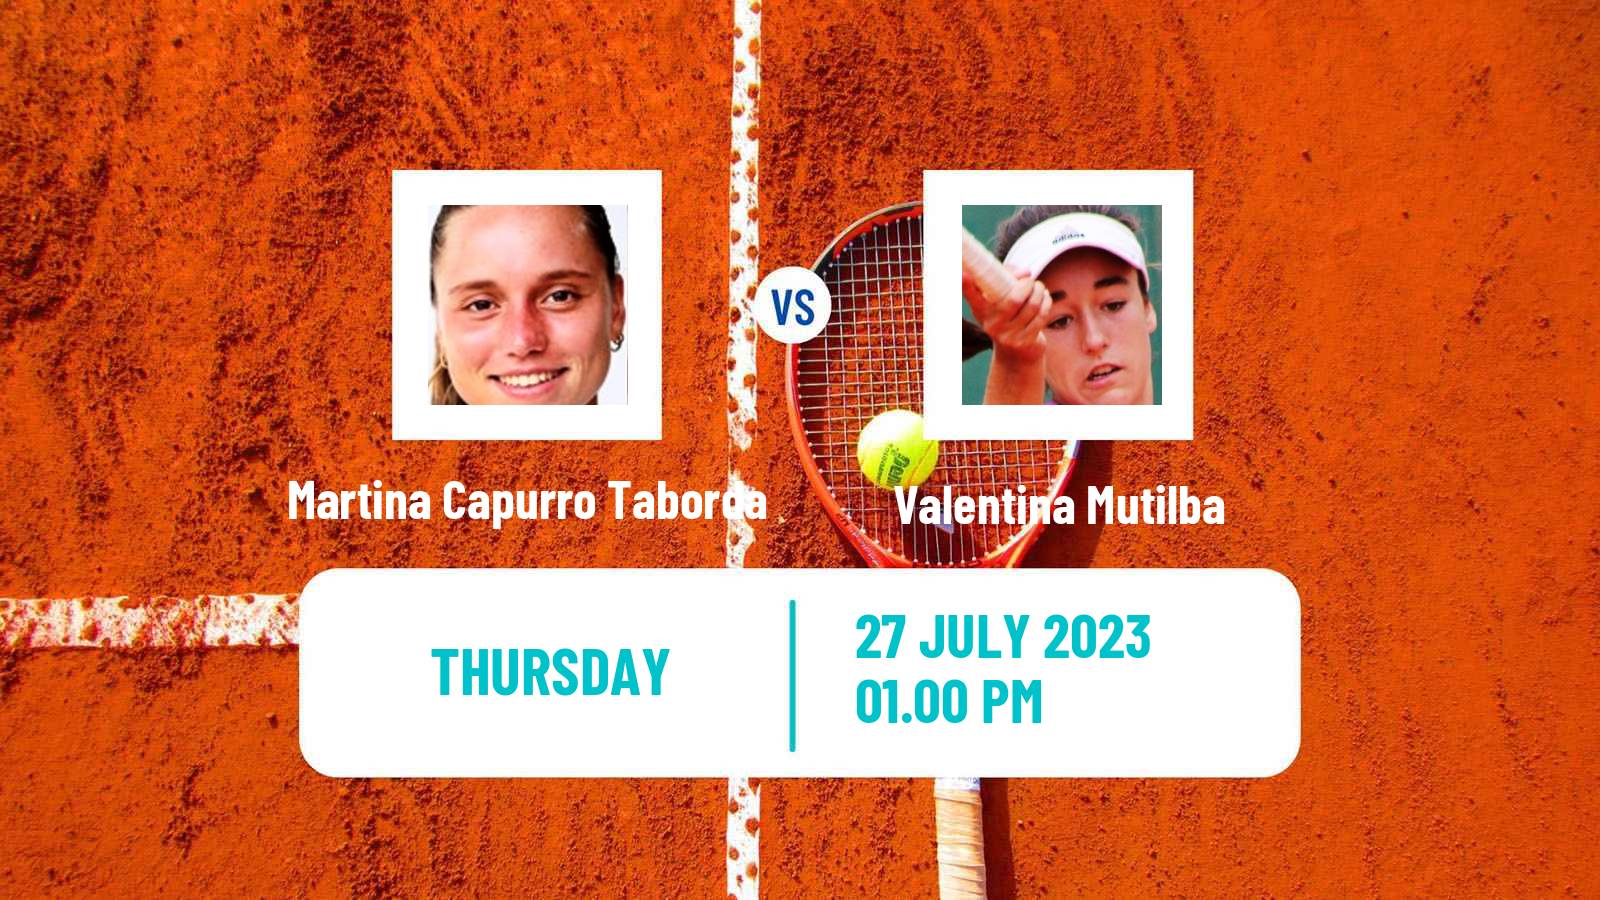 Tennis ITF W25 Bragado Women Martina Capurro Taborda - Valentina Mutilba